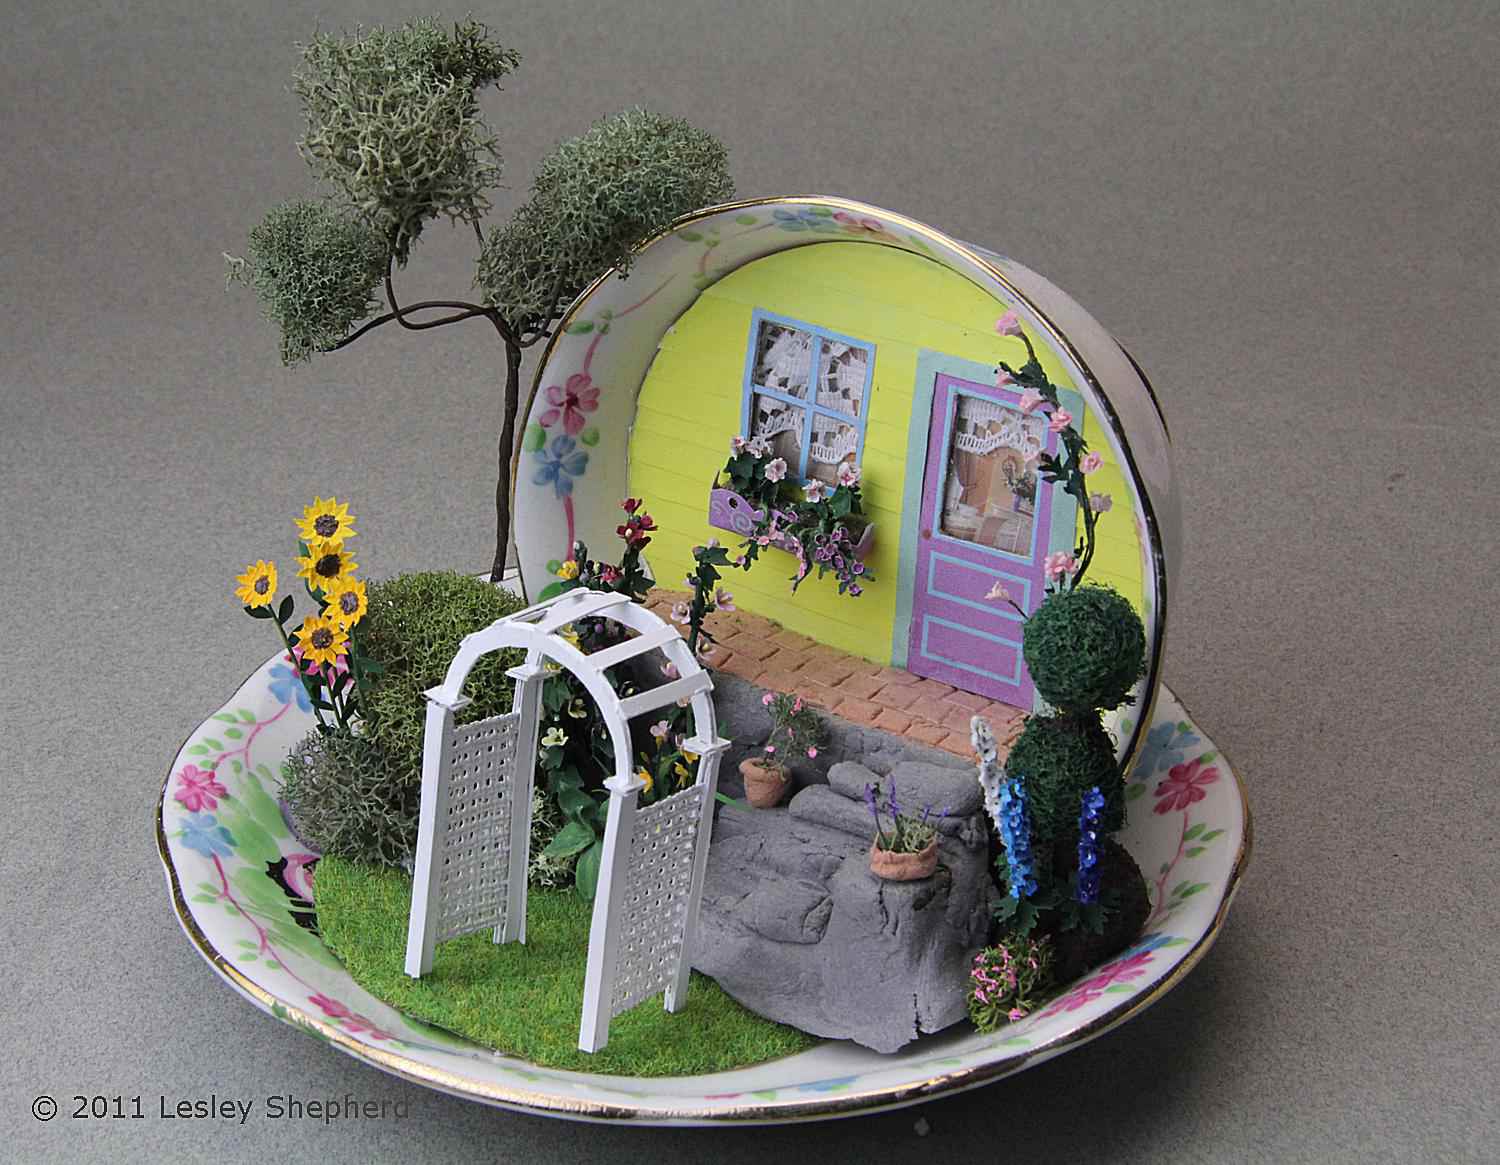 Quarter scale garden arbor set in a miniature garden scene in a tea cup.